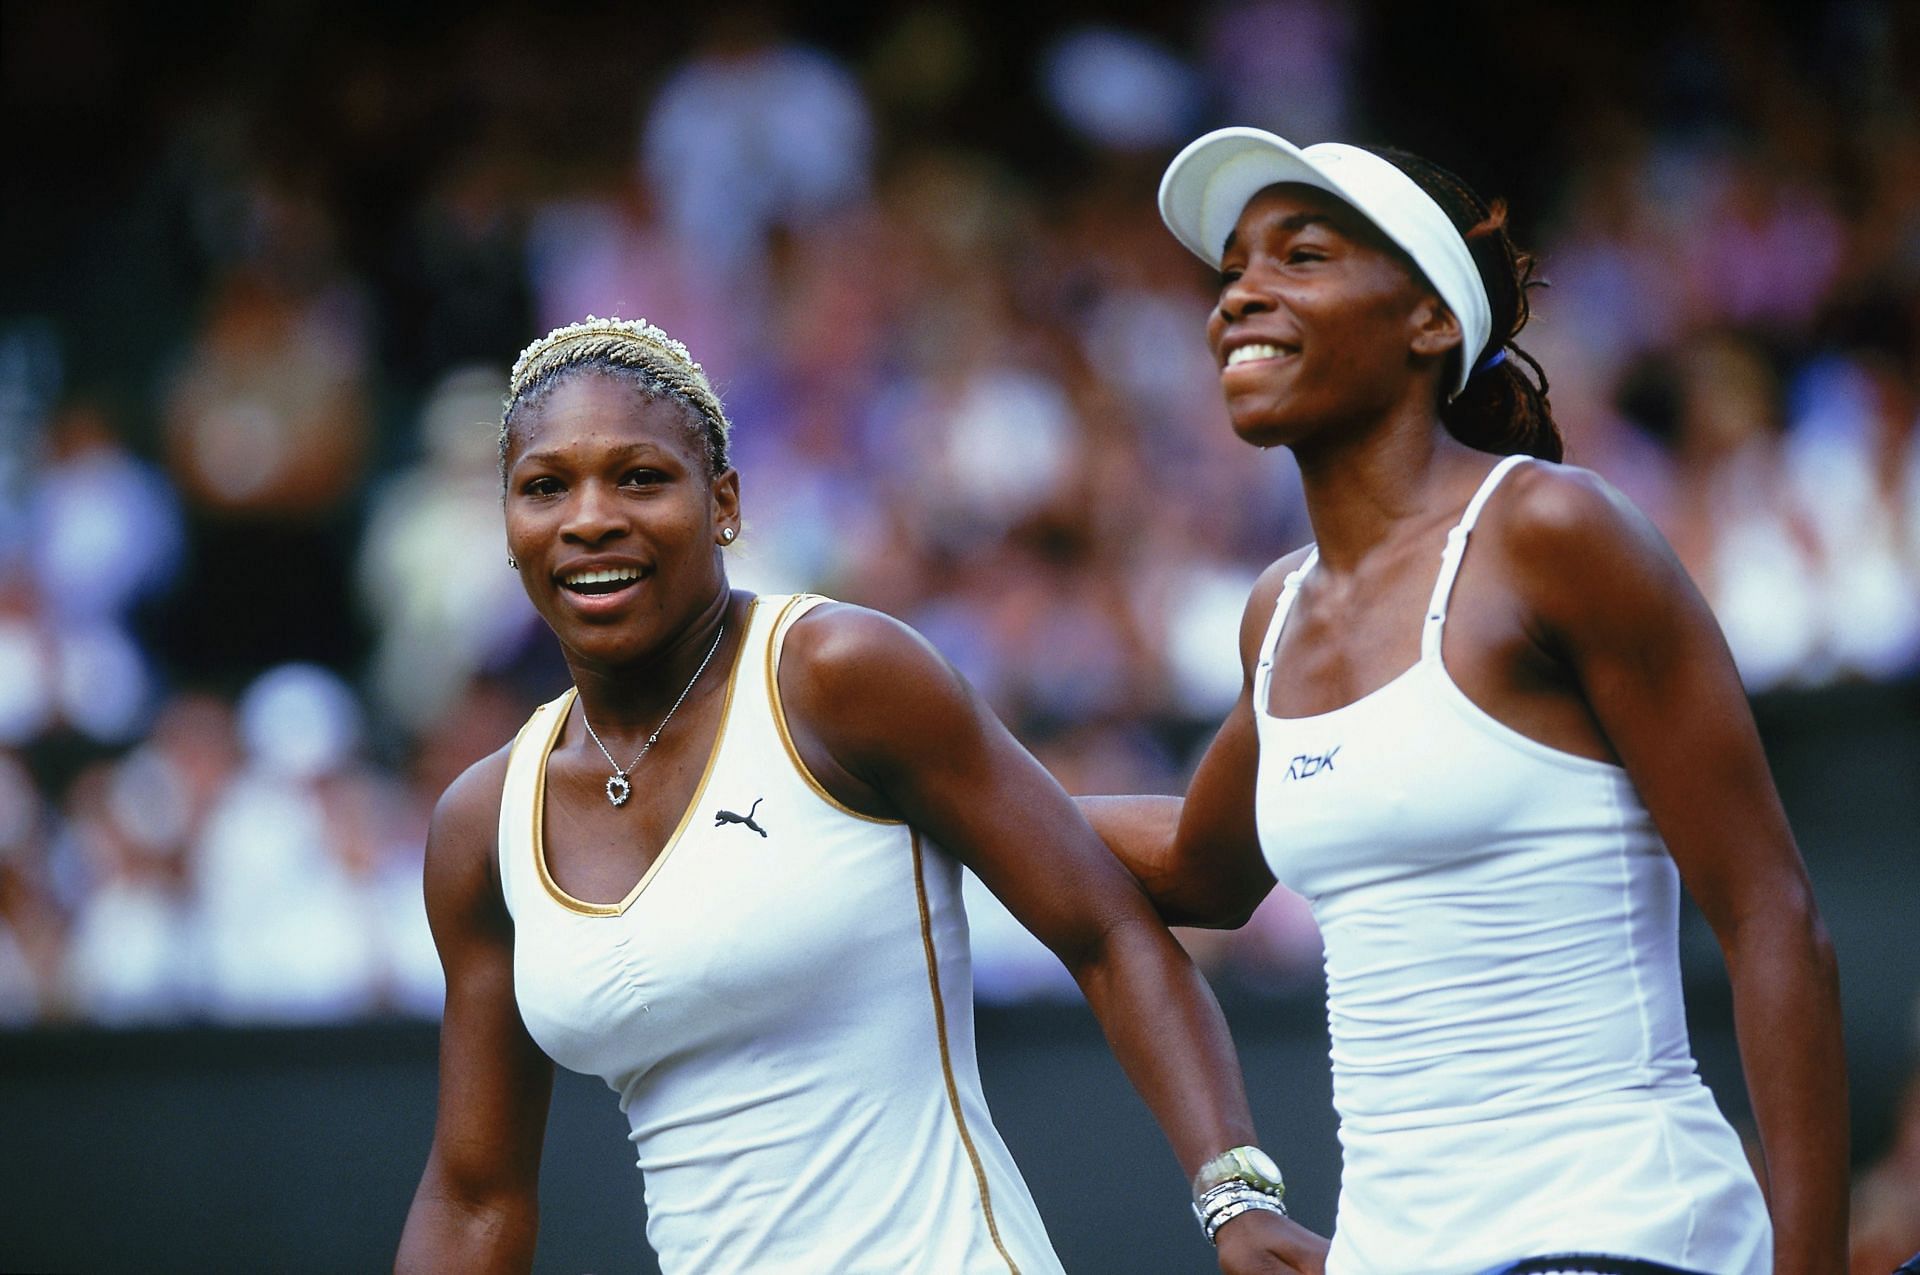 Serena Williams bested sister Venus in Wimbledon in 2002.